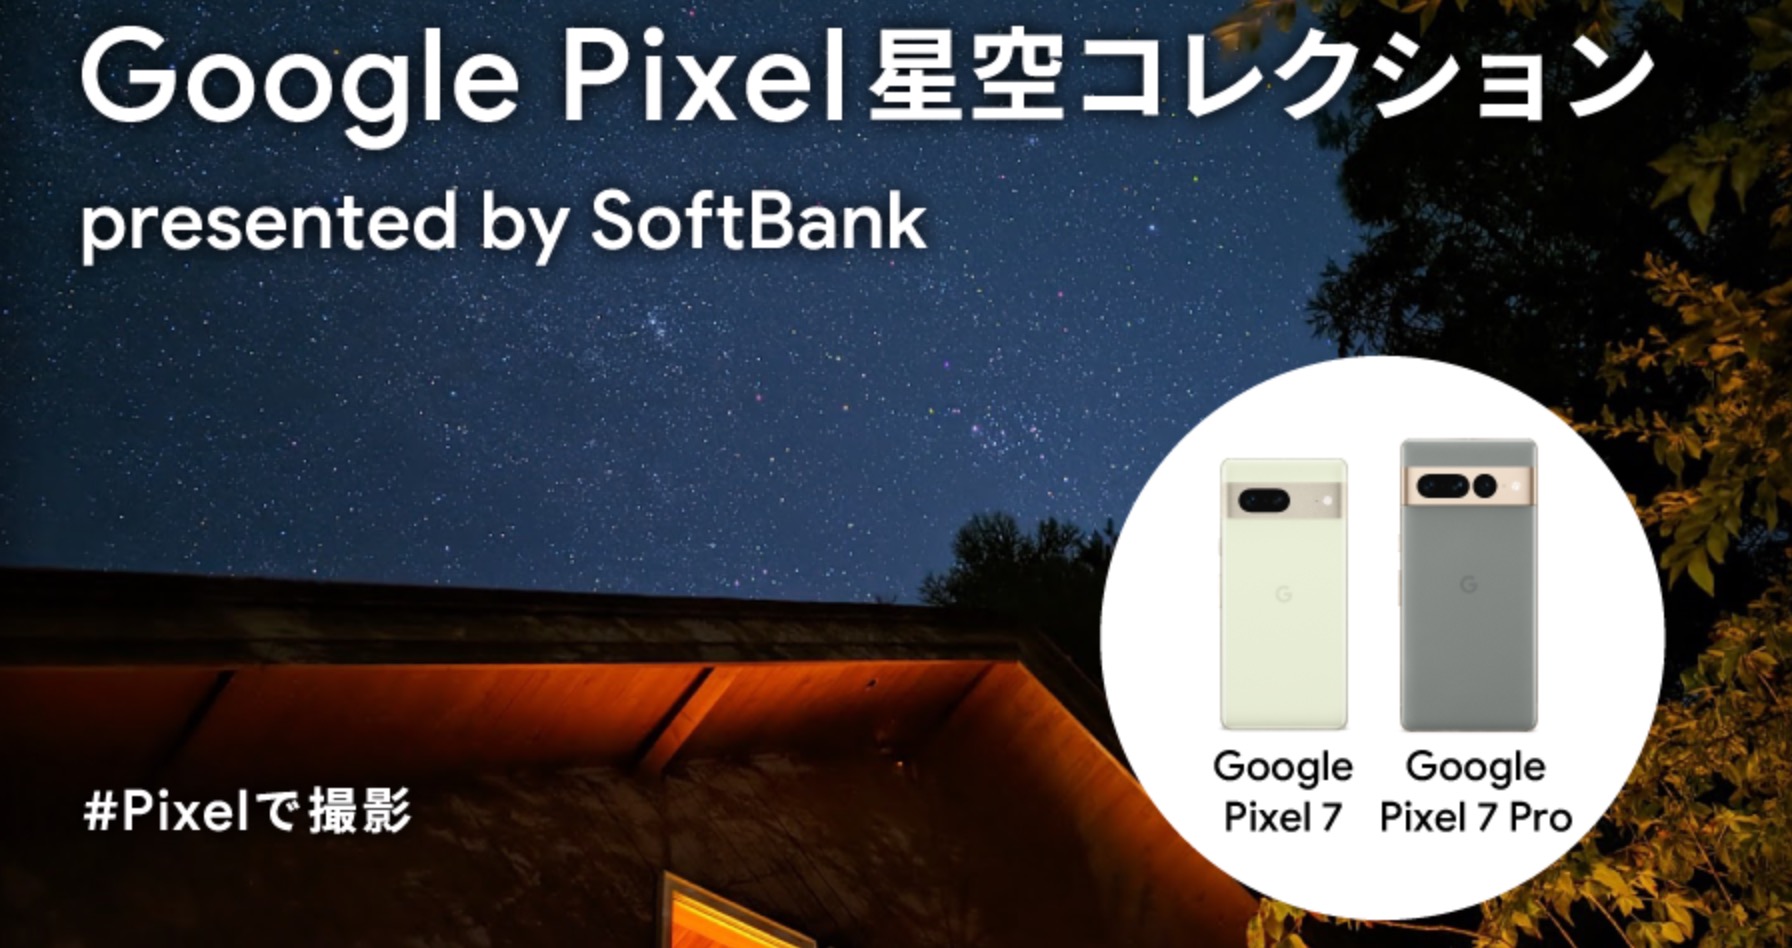 Google Pixel 星空コレクション フォトコンテスト